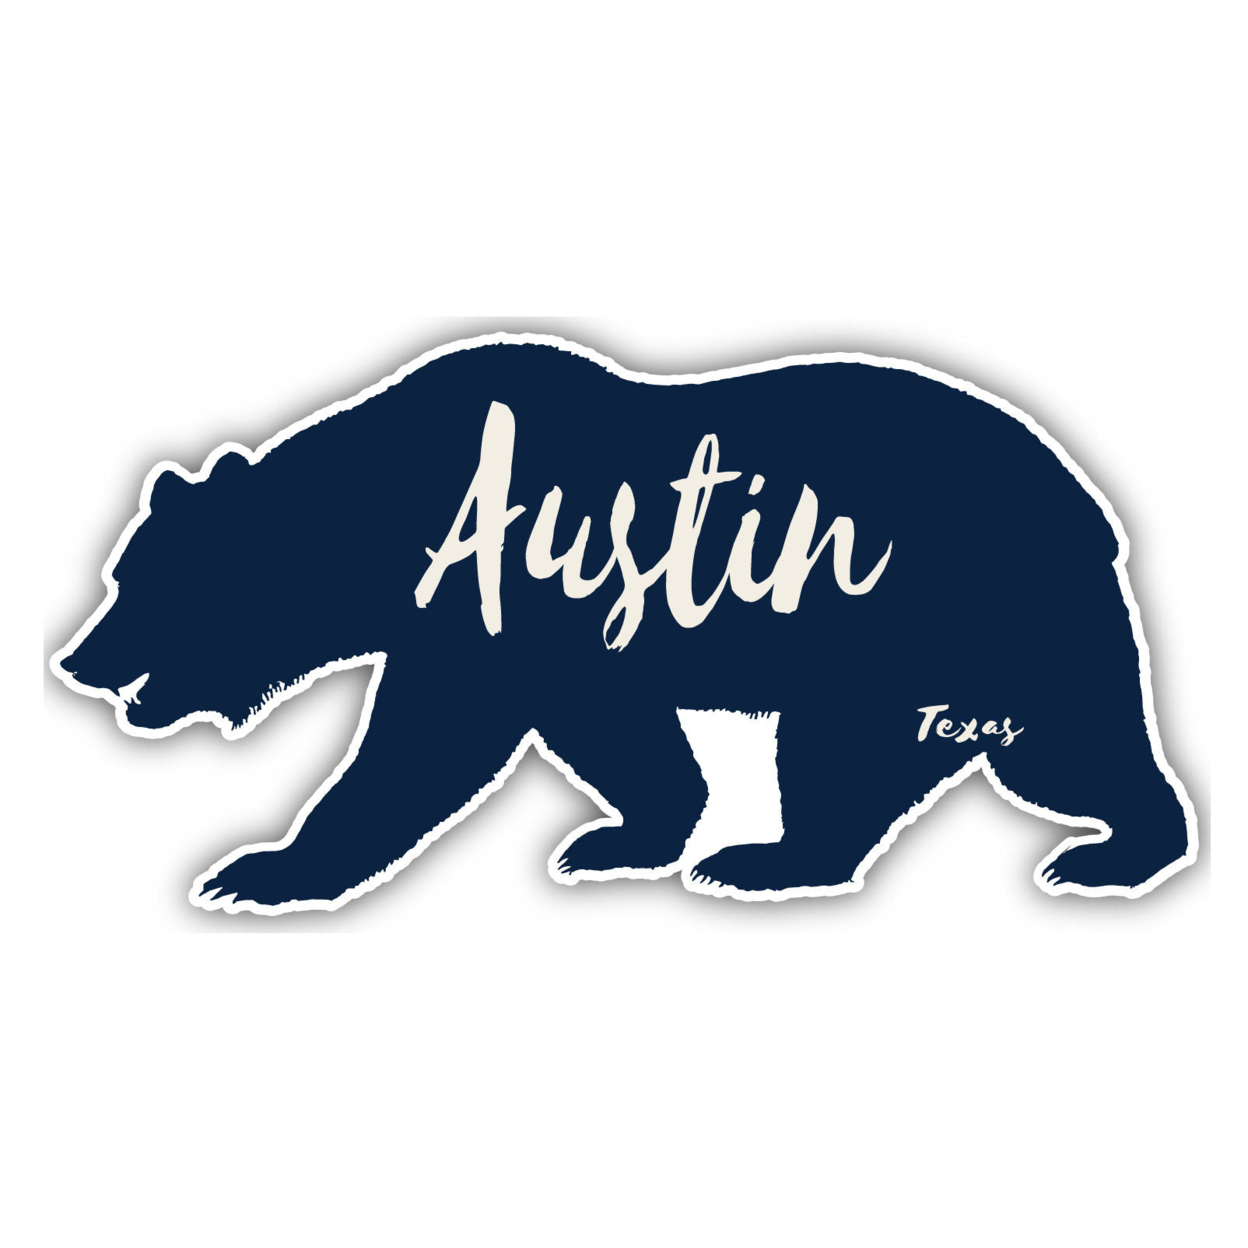 Austin Texas Souvenir Decorative Stickers (Choose Theme And Size) - 4-Pack, 12-Inch, Bear